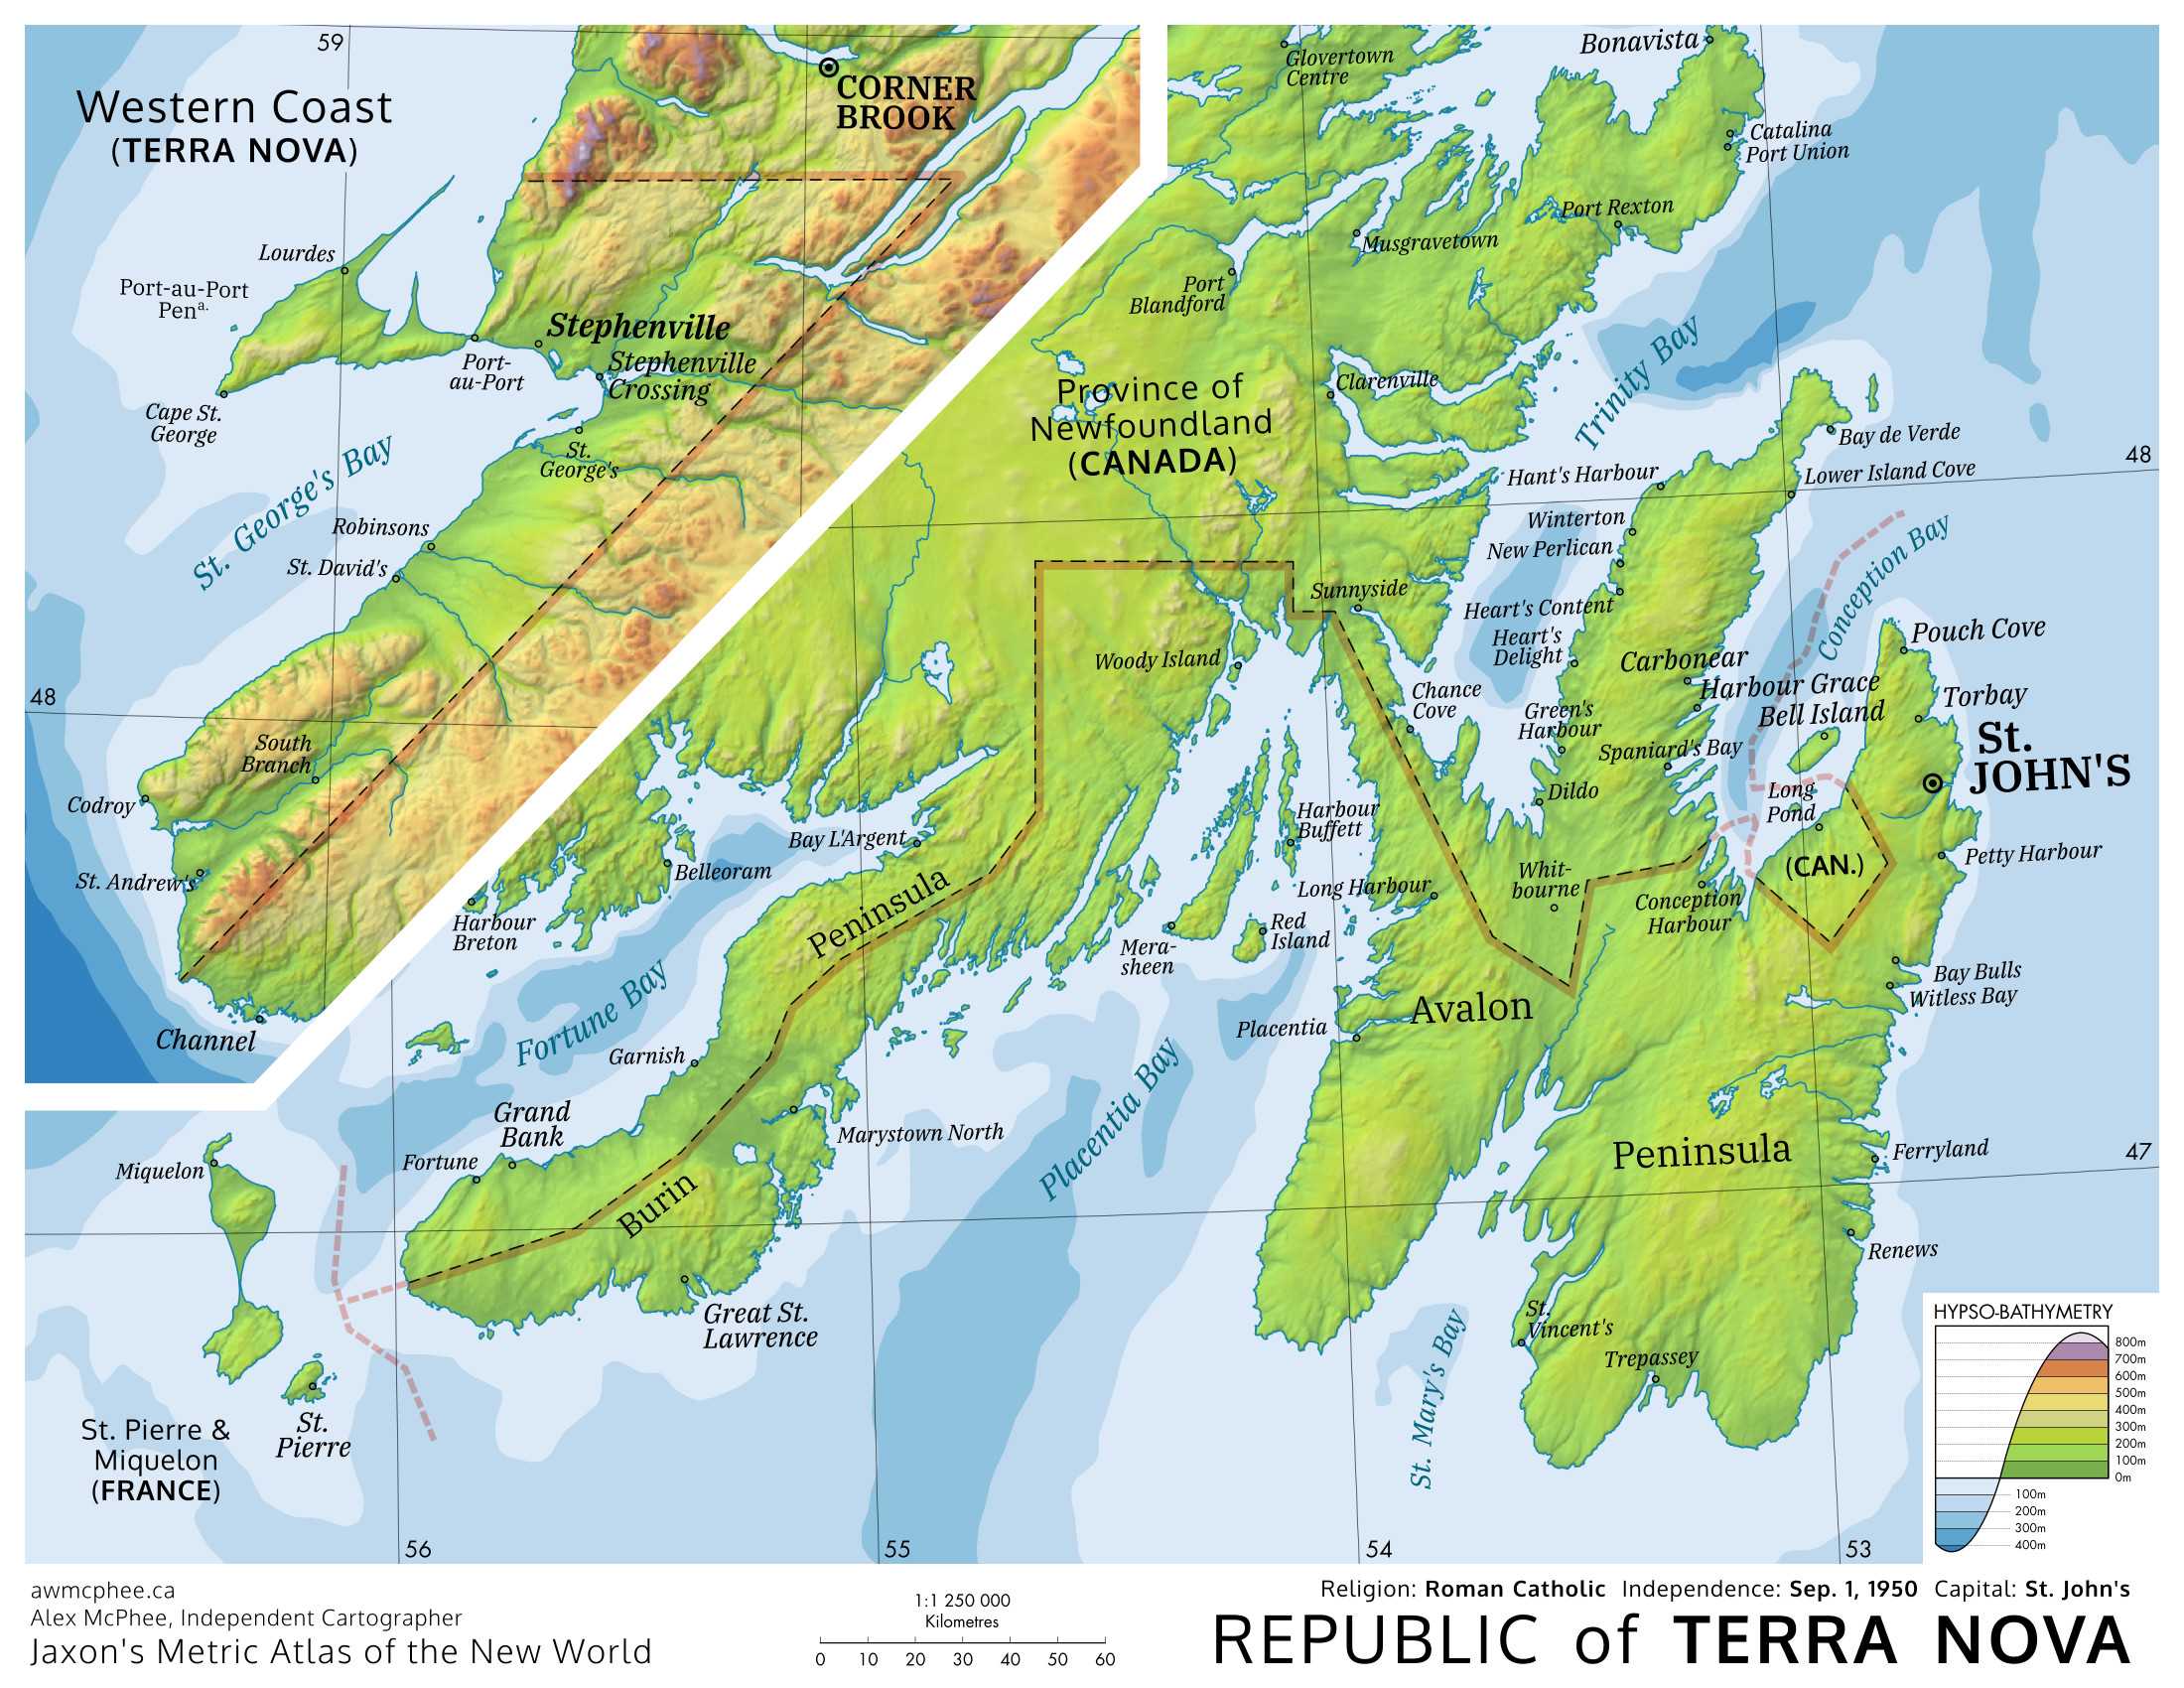 A fictional map of Newfoundland.